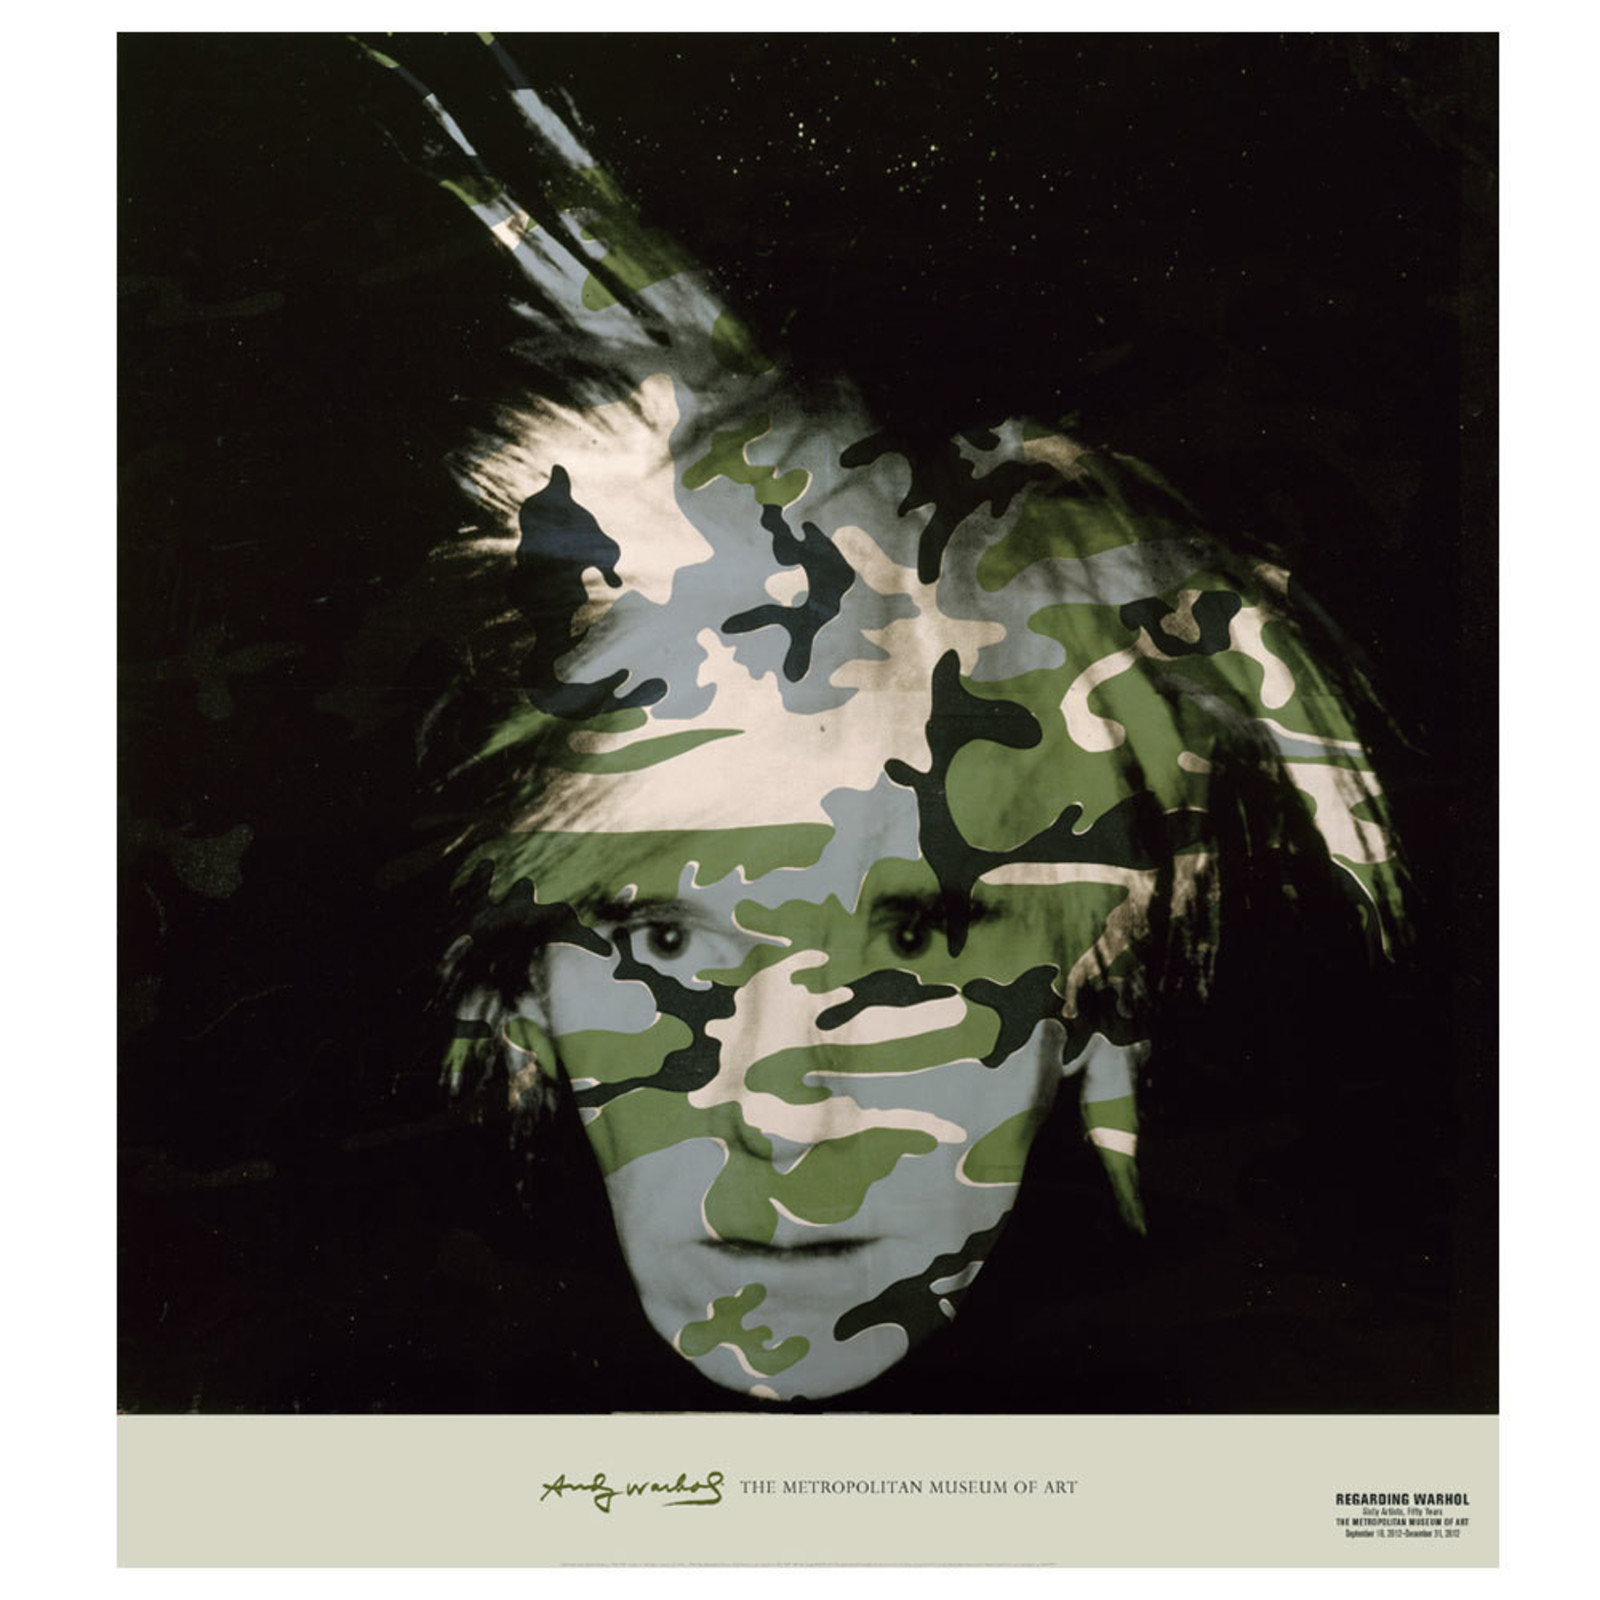 Andy Warhol. Self-Portrait. 1986. Acrylic and silkscreen on canvas. 203.2 x 203.2 cm. Metropolitan Museum of Art, New York